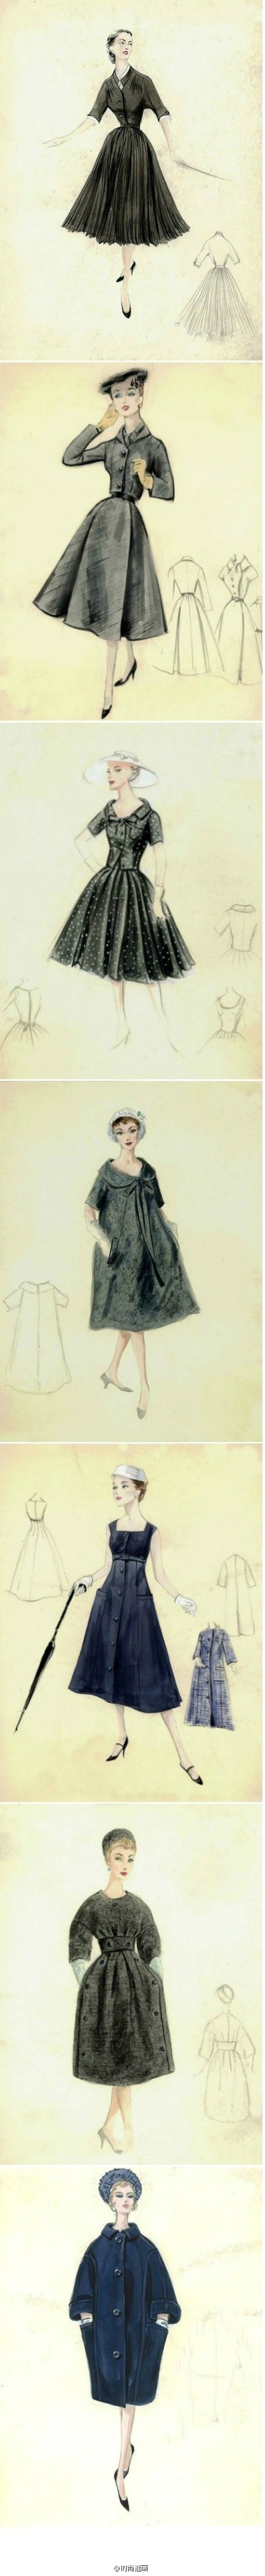 1950-1969 christian dior时装设计稿,经典的a型大衣,钟型大衣,伞裙短